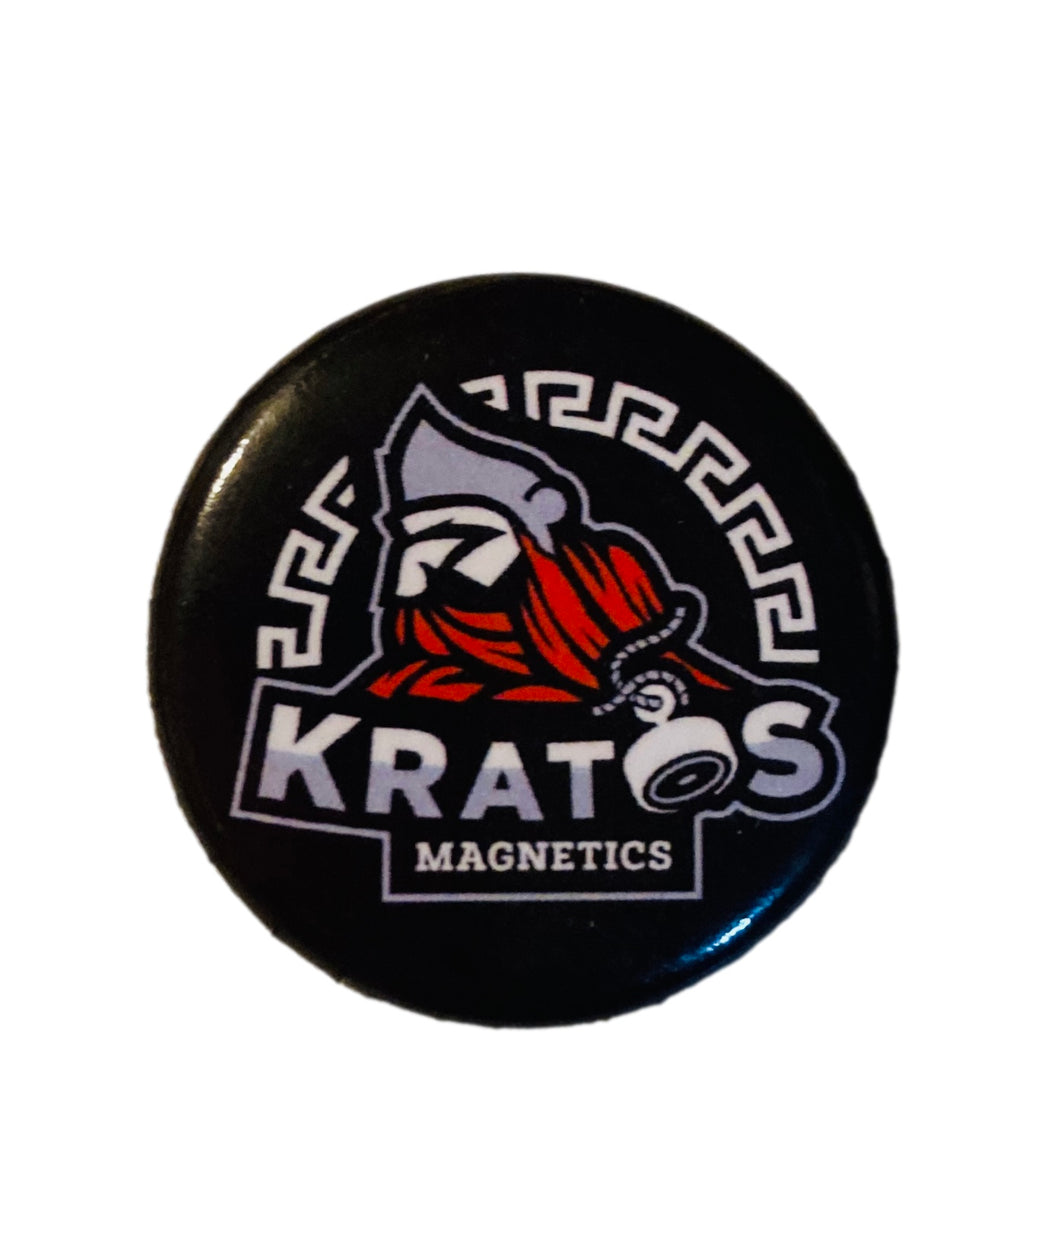 Kratos Magnetics Button - Kratos Magnetics LLC